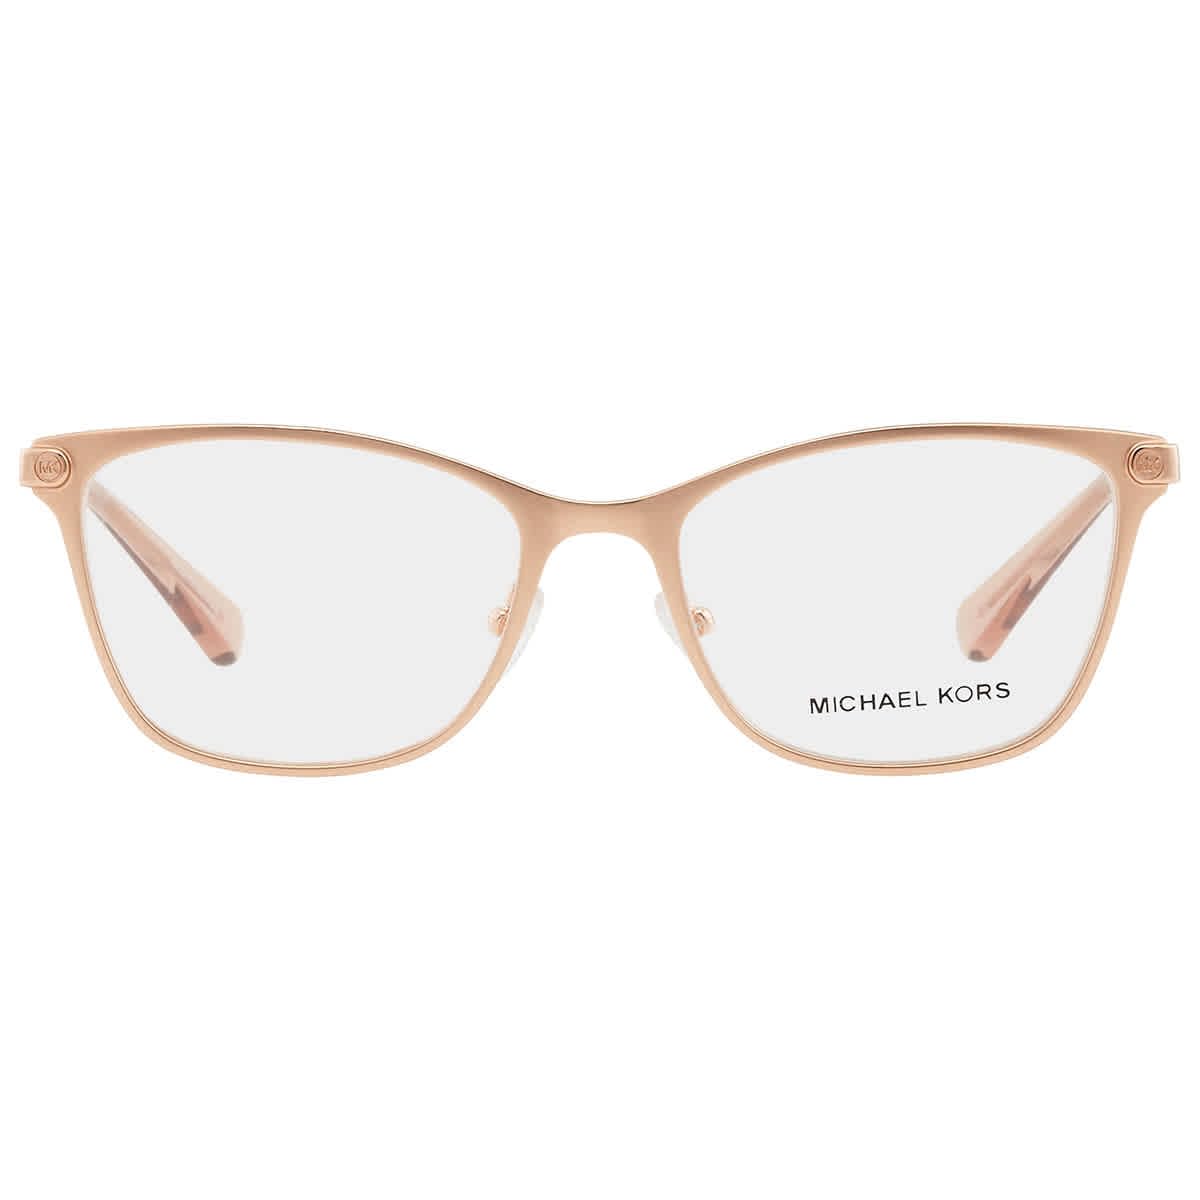 Michael Kors Demo Rectangular Ladies Eyeglasses 0MK3050 1108 51